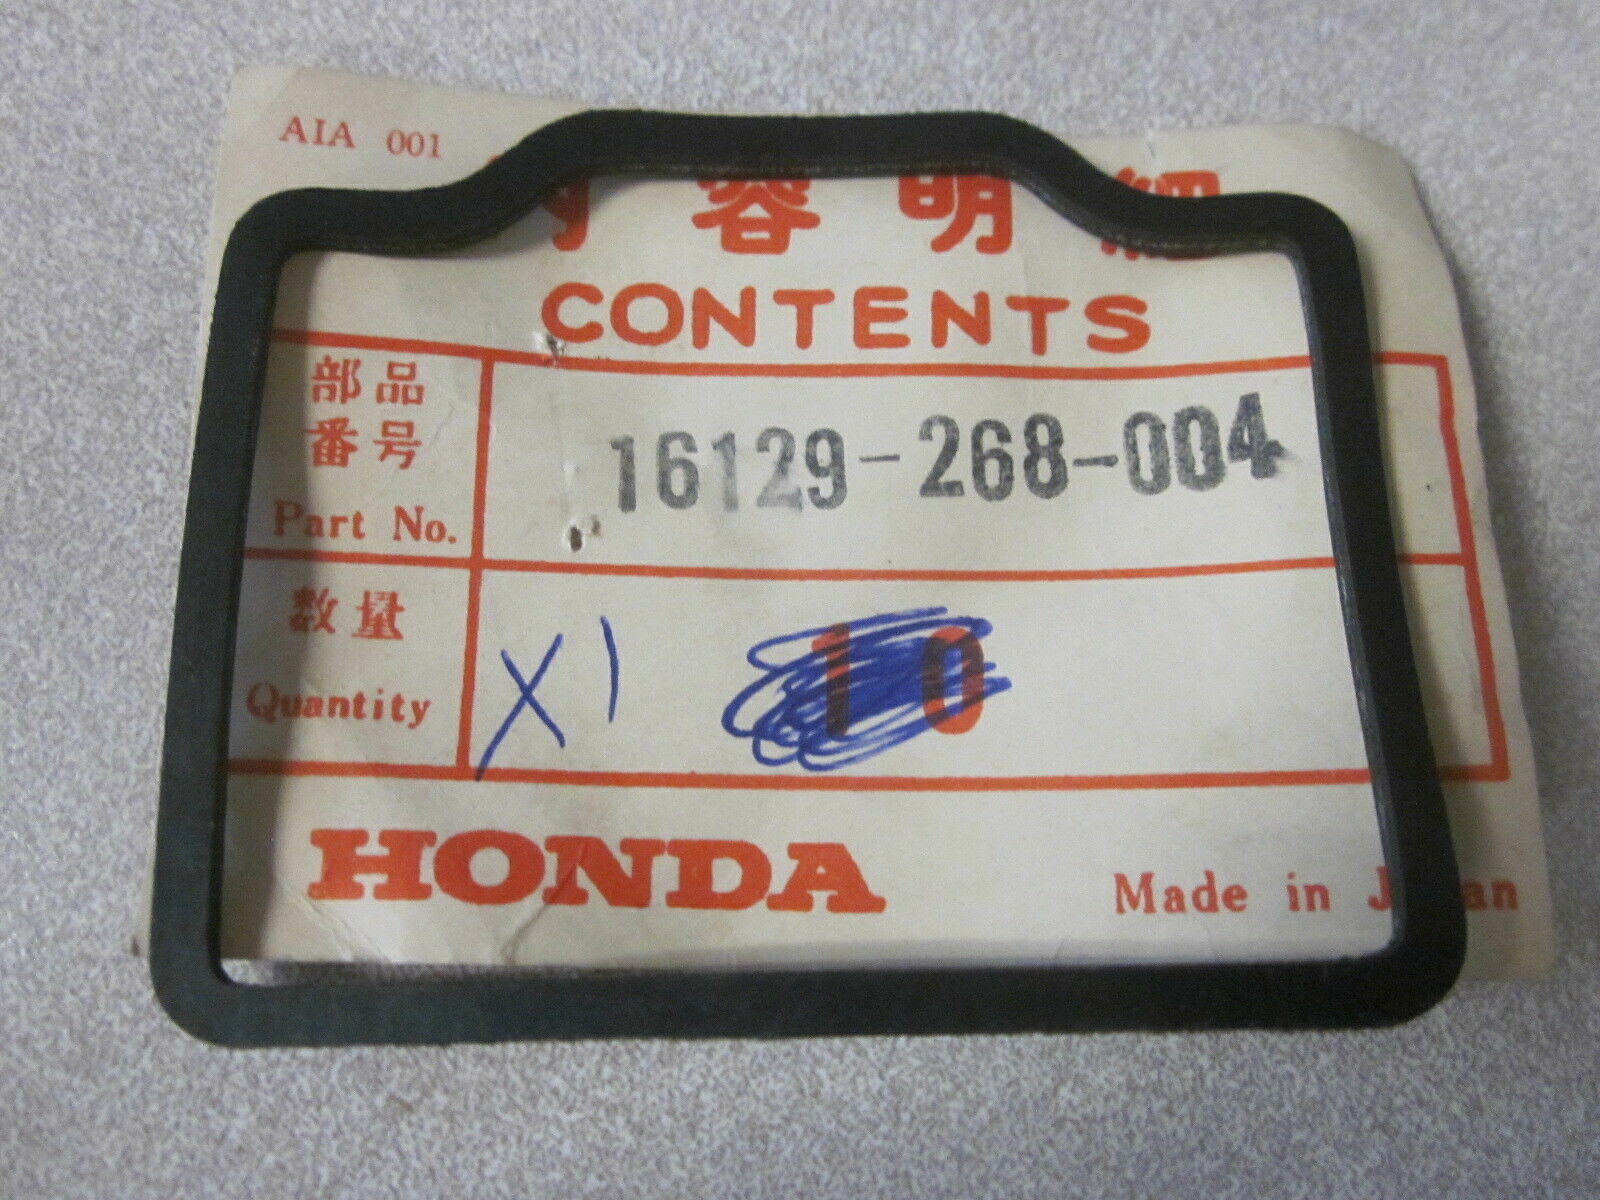 NOS OEM Honda Washer 1961-71 CB7 CL175 16129-268-004